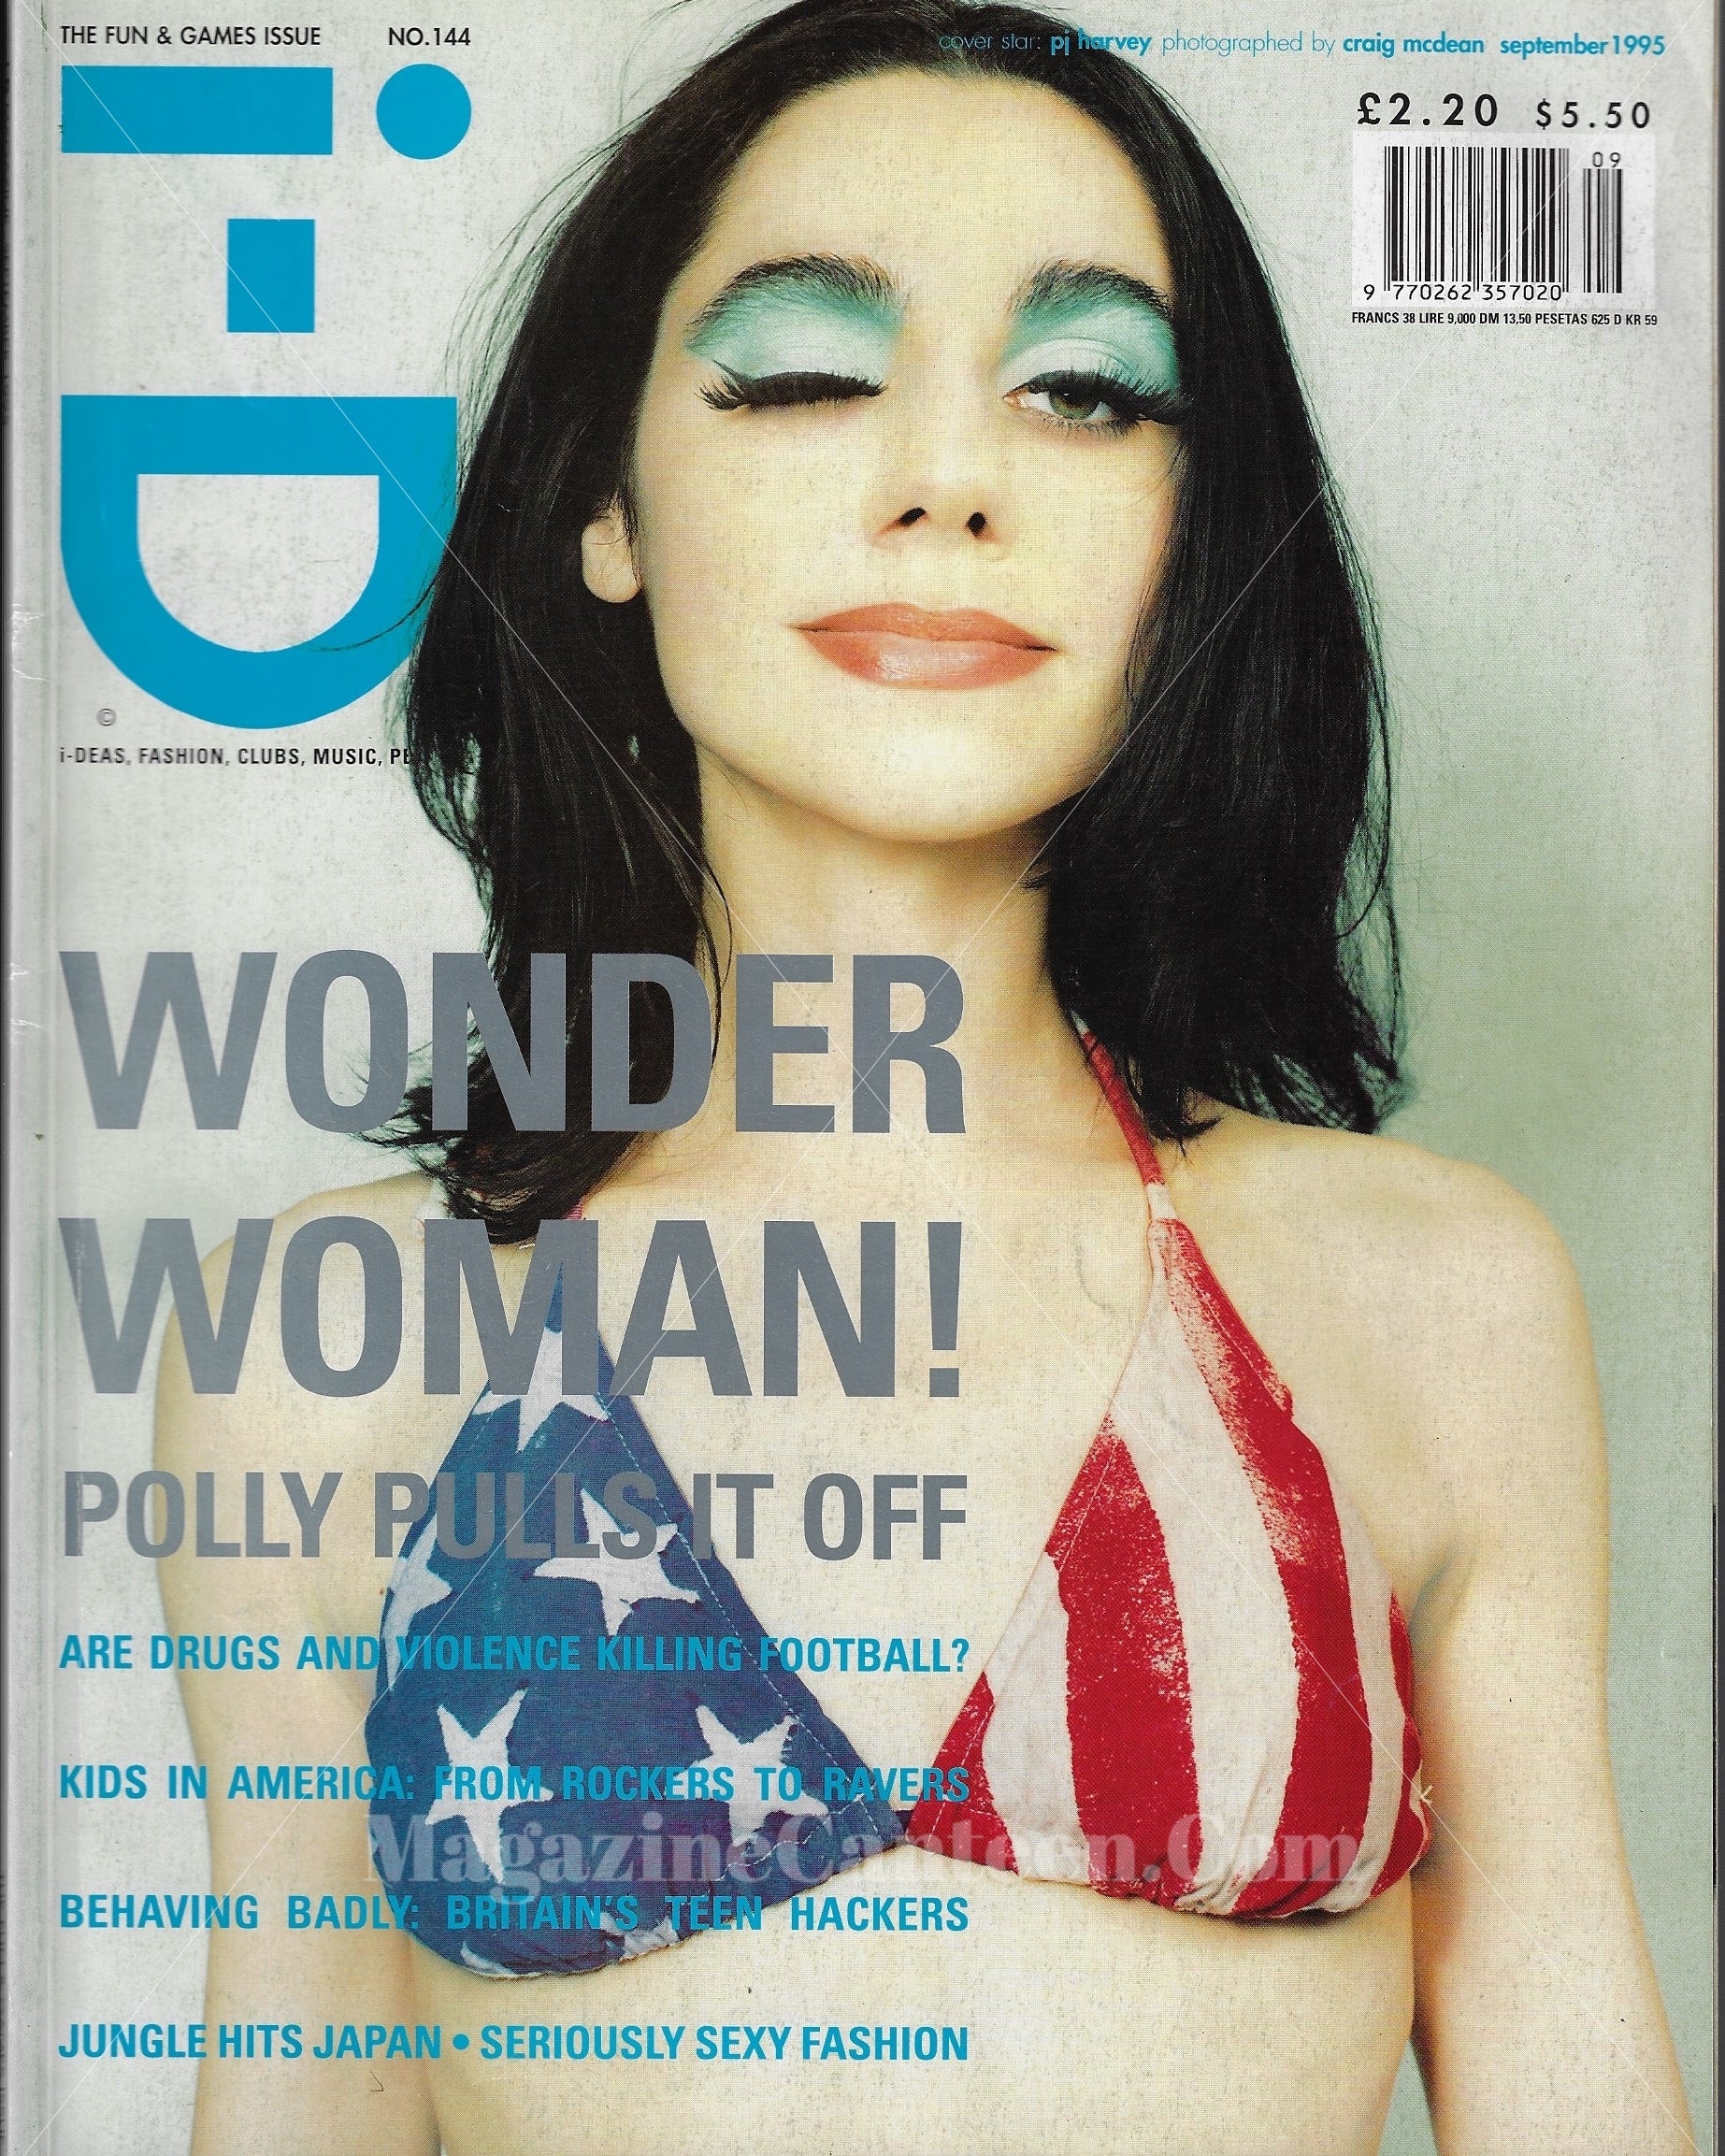 I-D Magazine 144 - PJ Harvey 1995